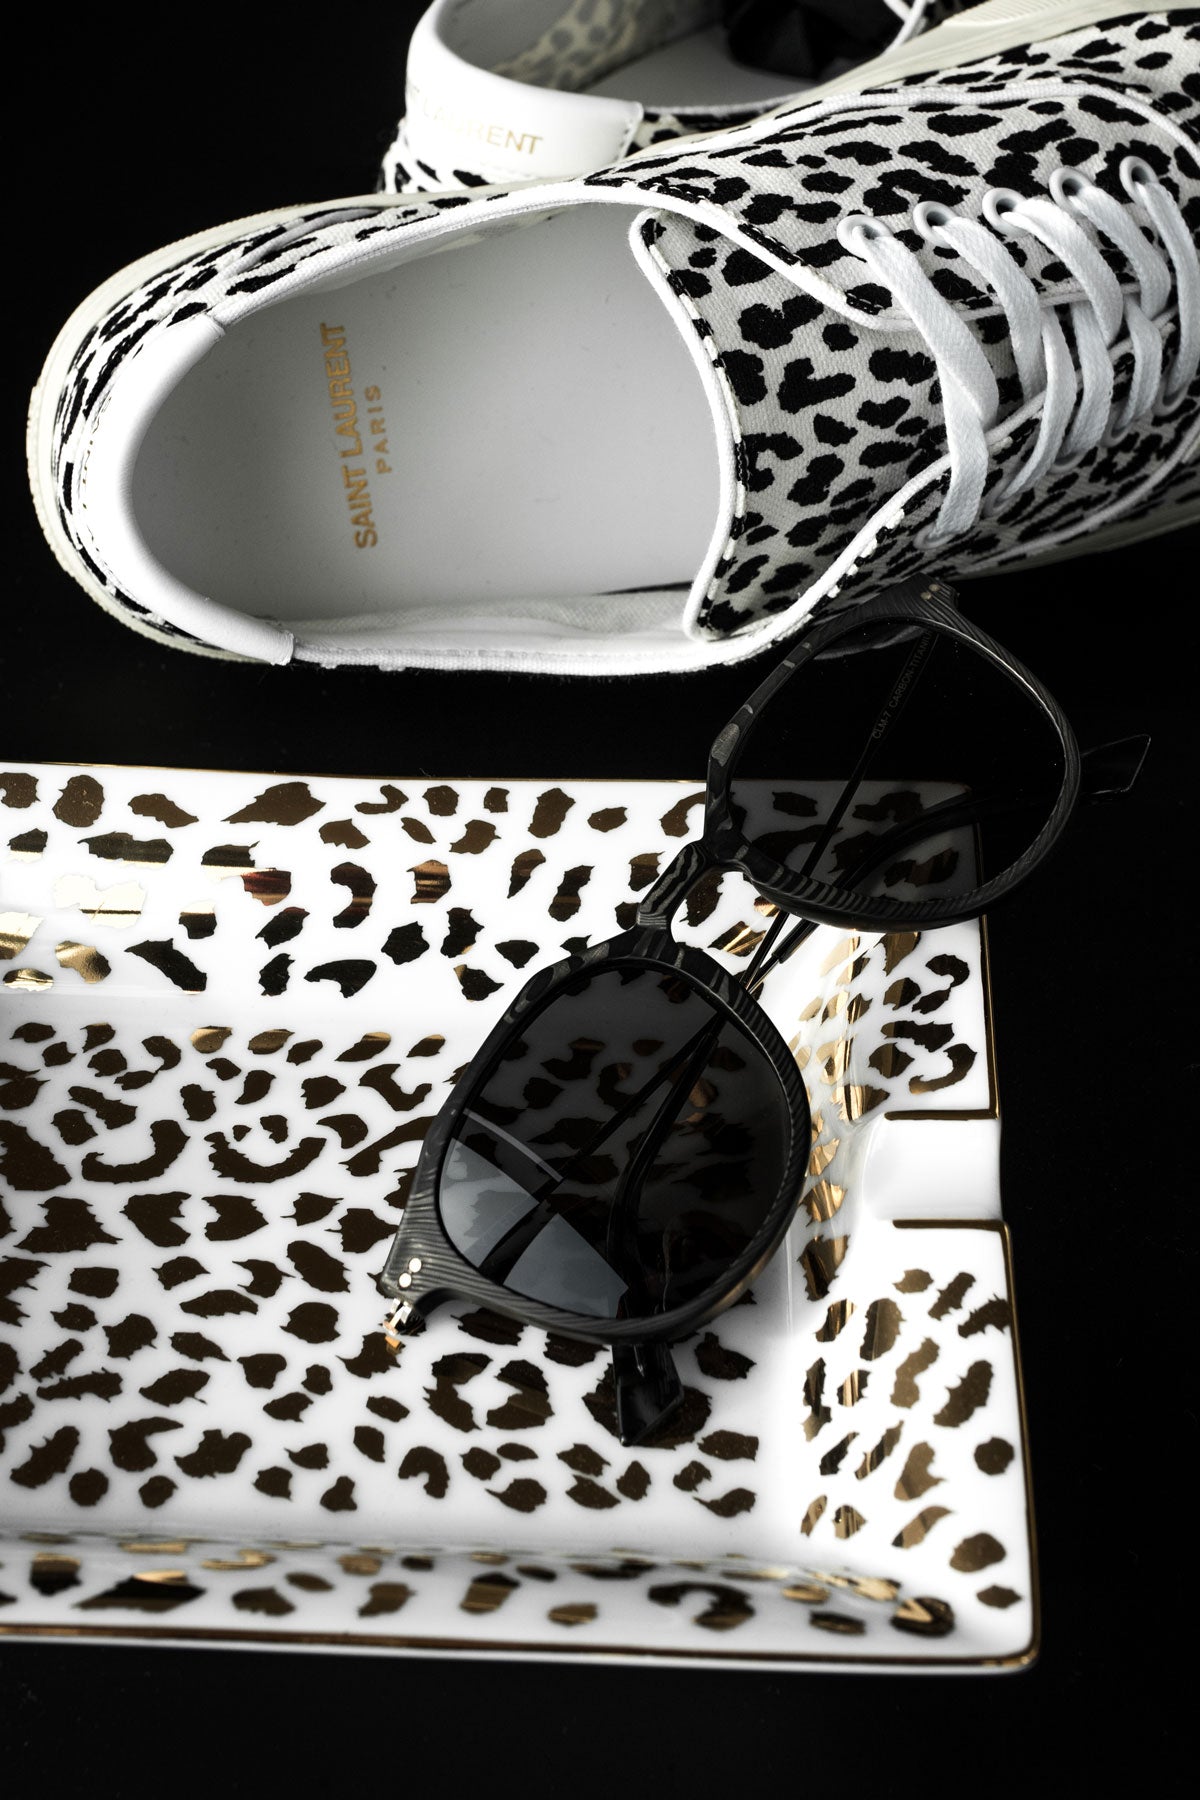 Roveri Eyewear all new CLM7 black on black carbon-titanium sunglasses photoshoot with paid2shoot.